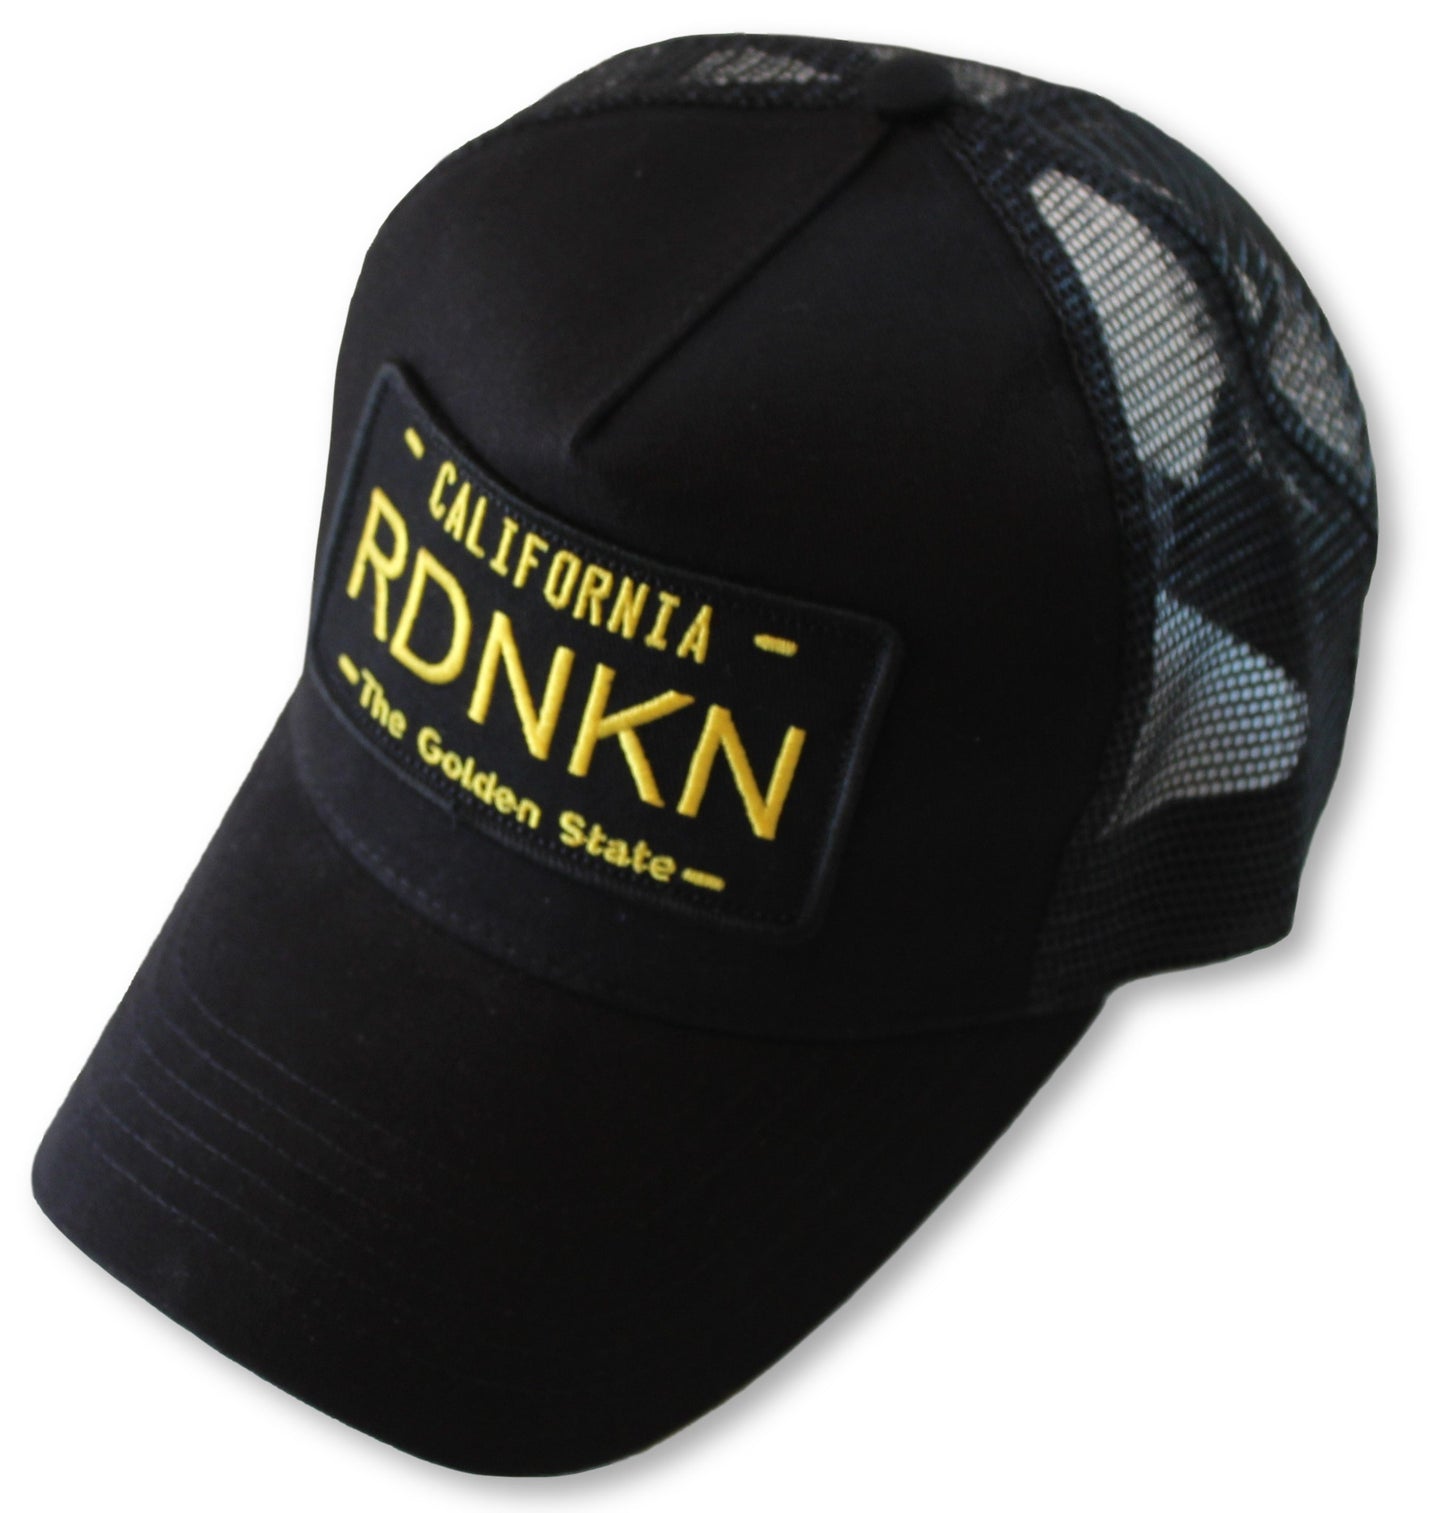 California RDNKN Mesh Snapback Trucker hat